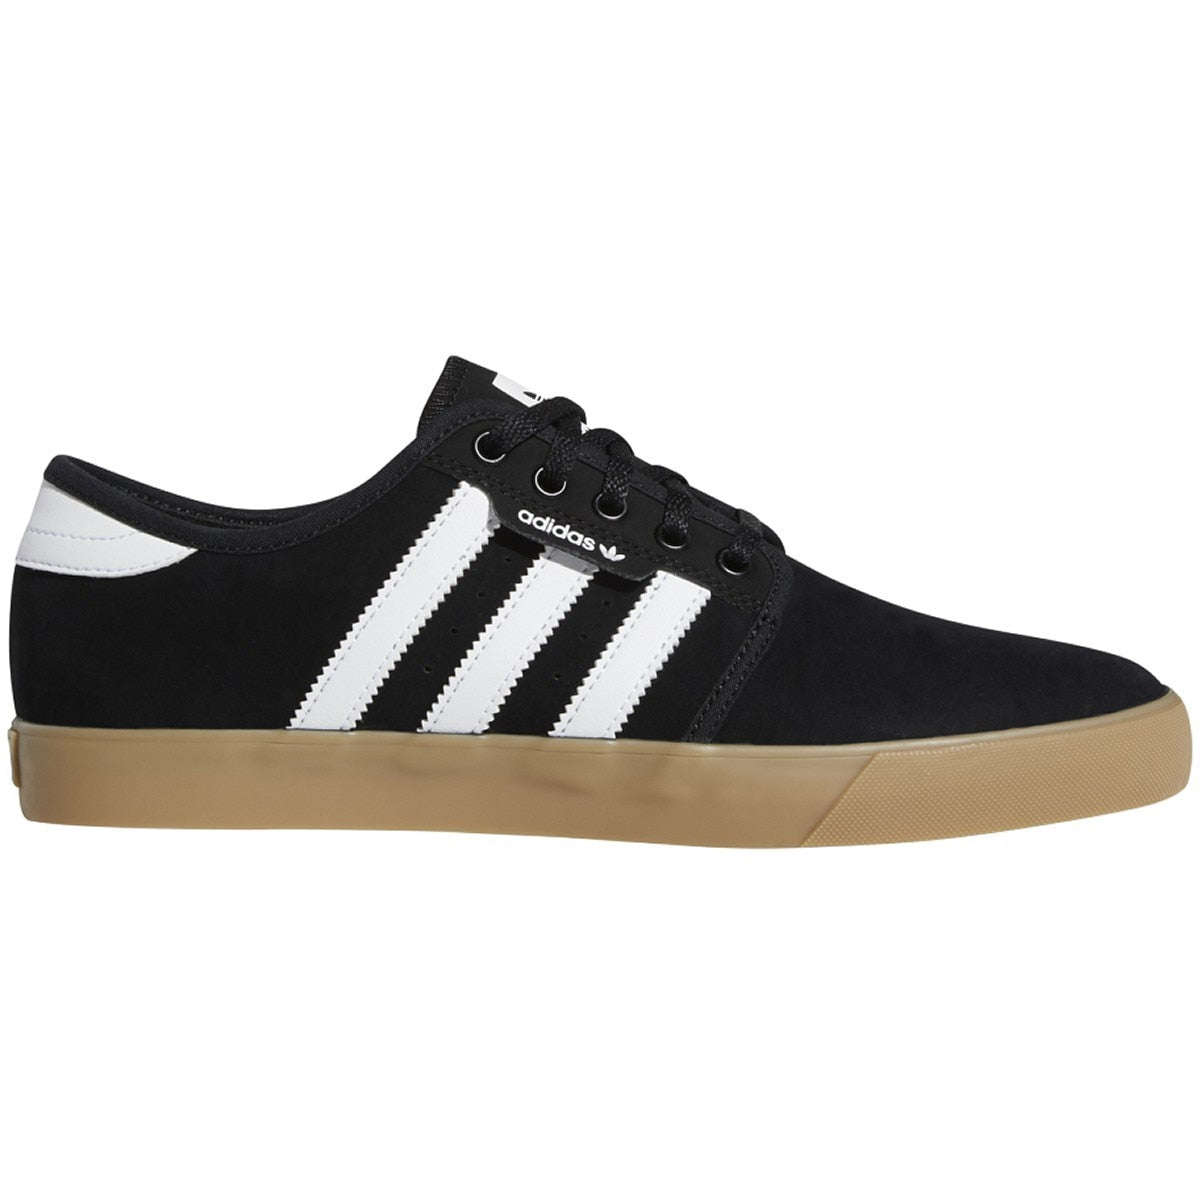 Adidas Seeley Skate Shoe - Core Black/White/Gum